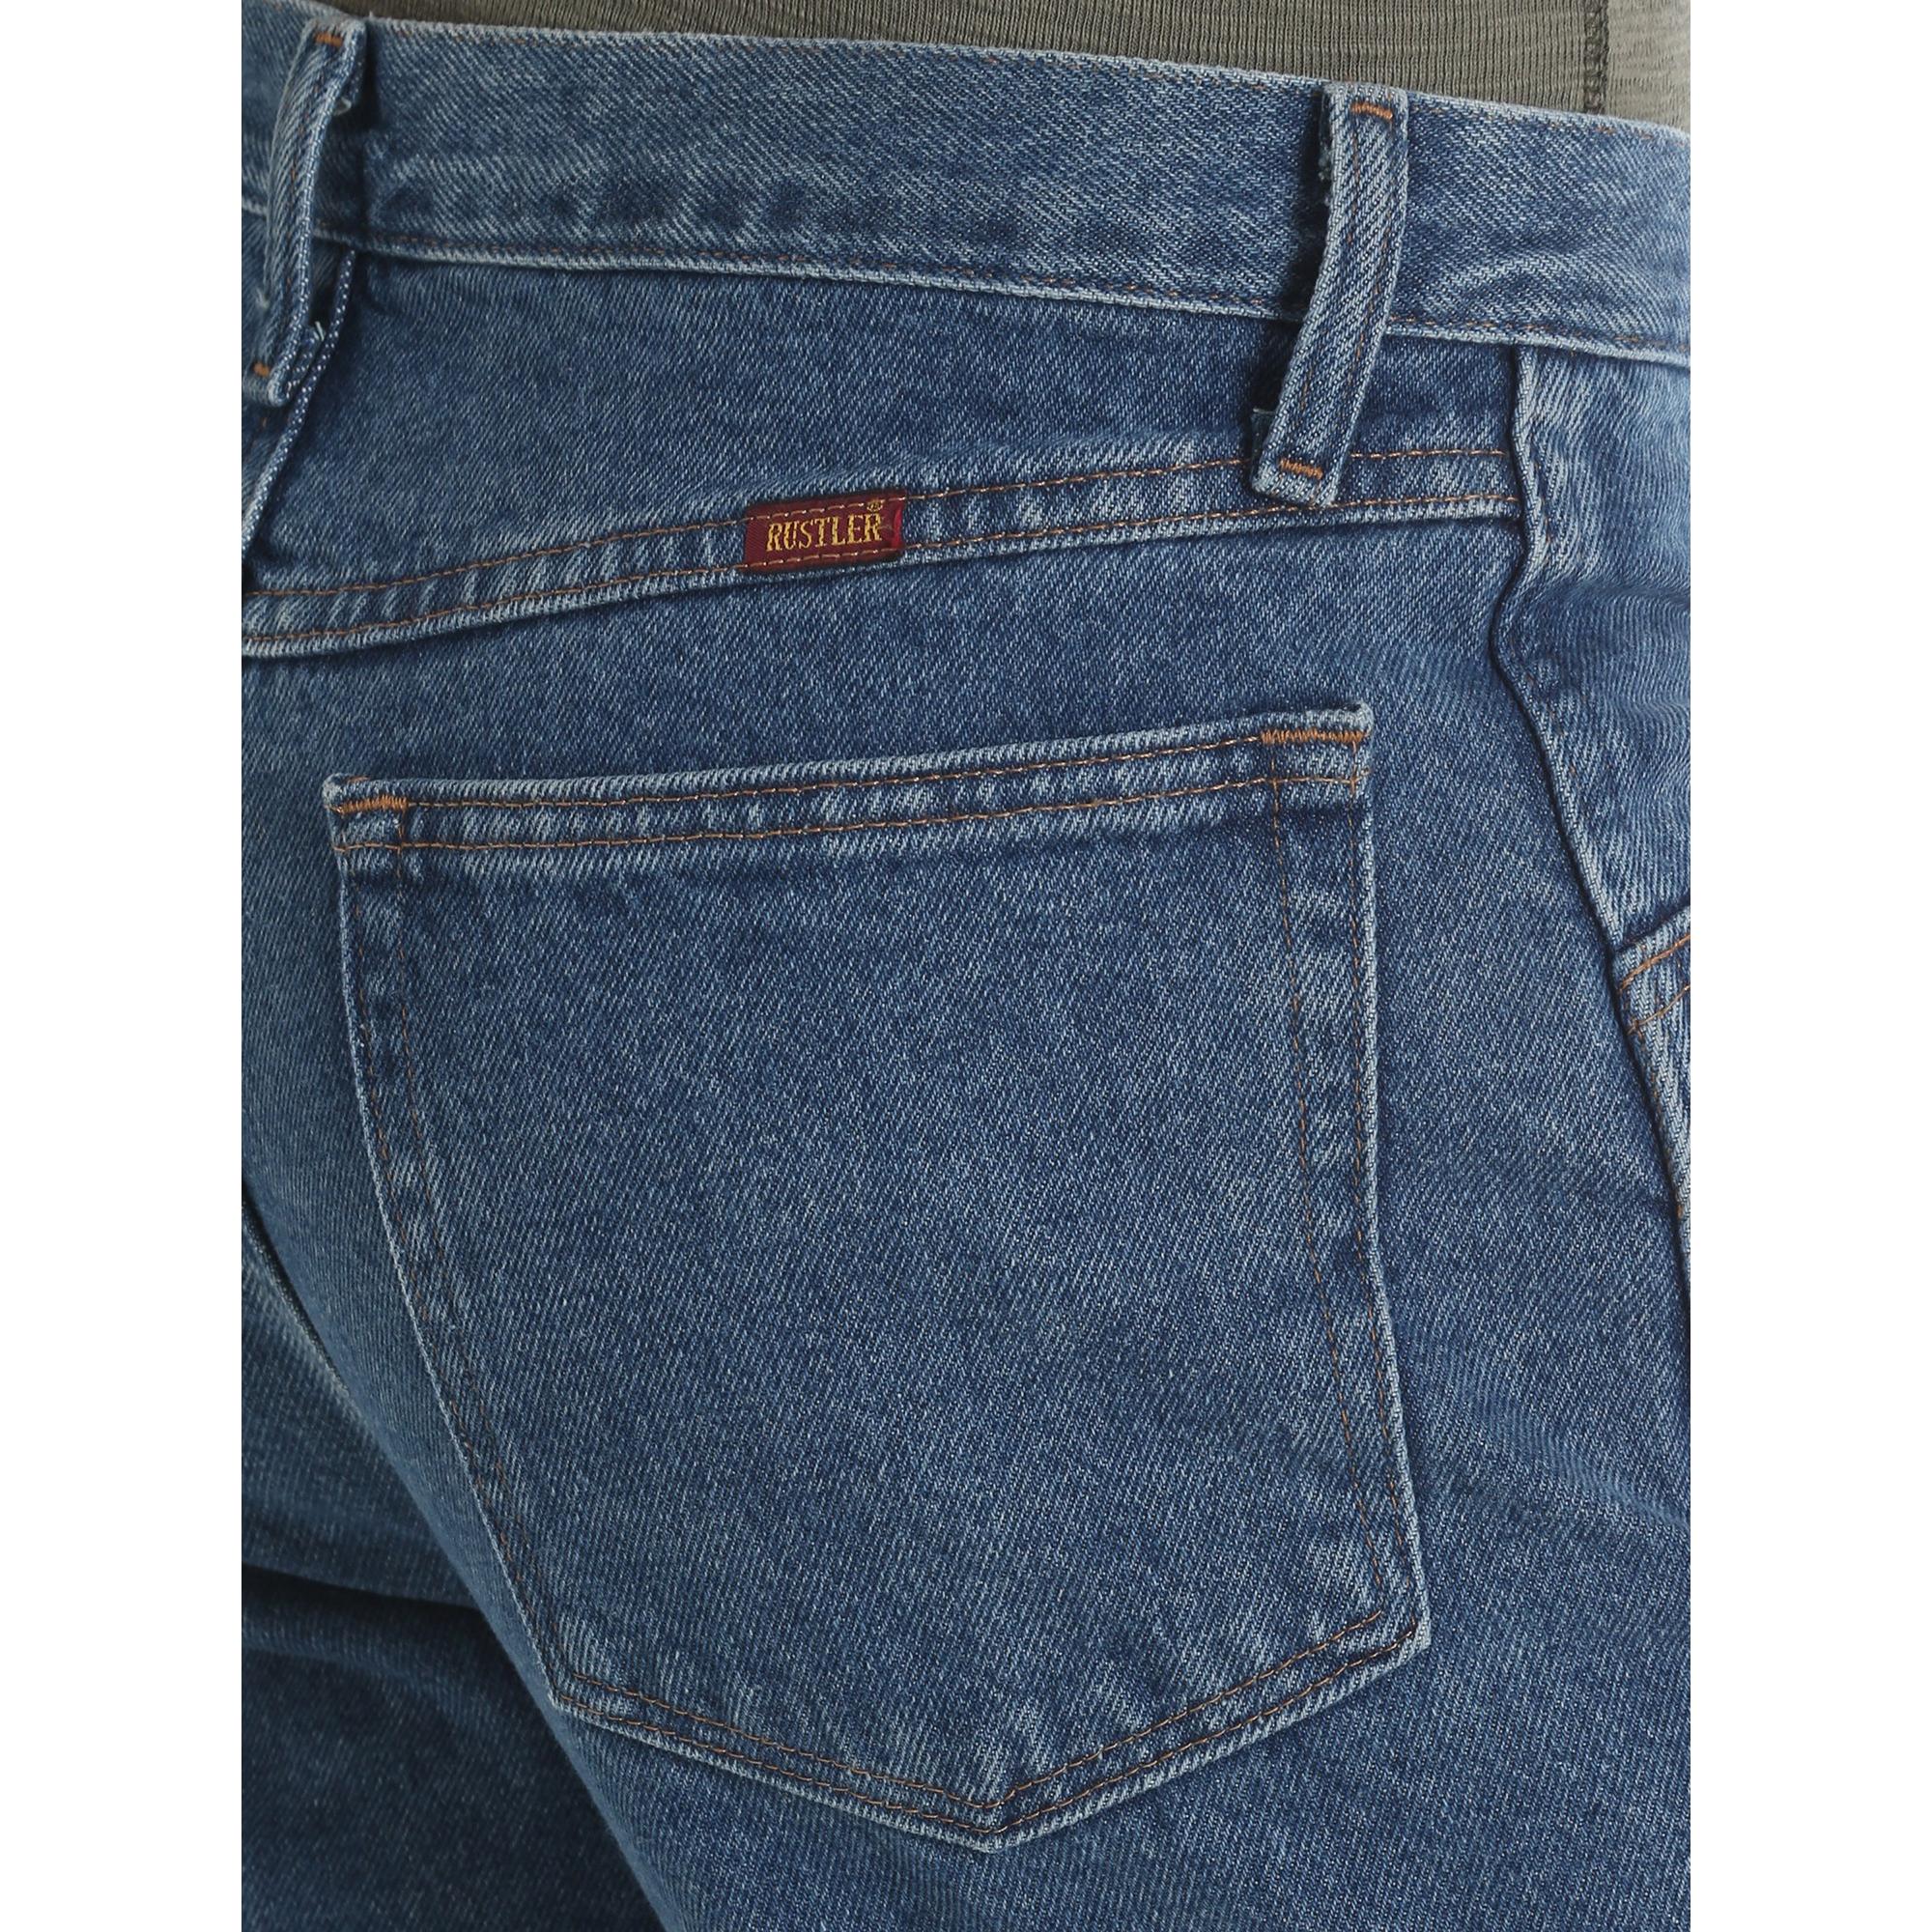 Wrangler Rustler Men's and Big Men's Regular Fit Jeans - image 6 of 7